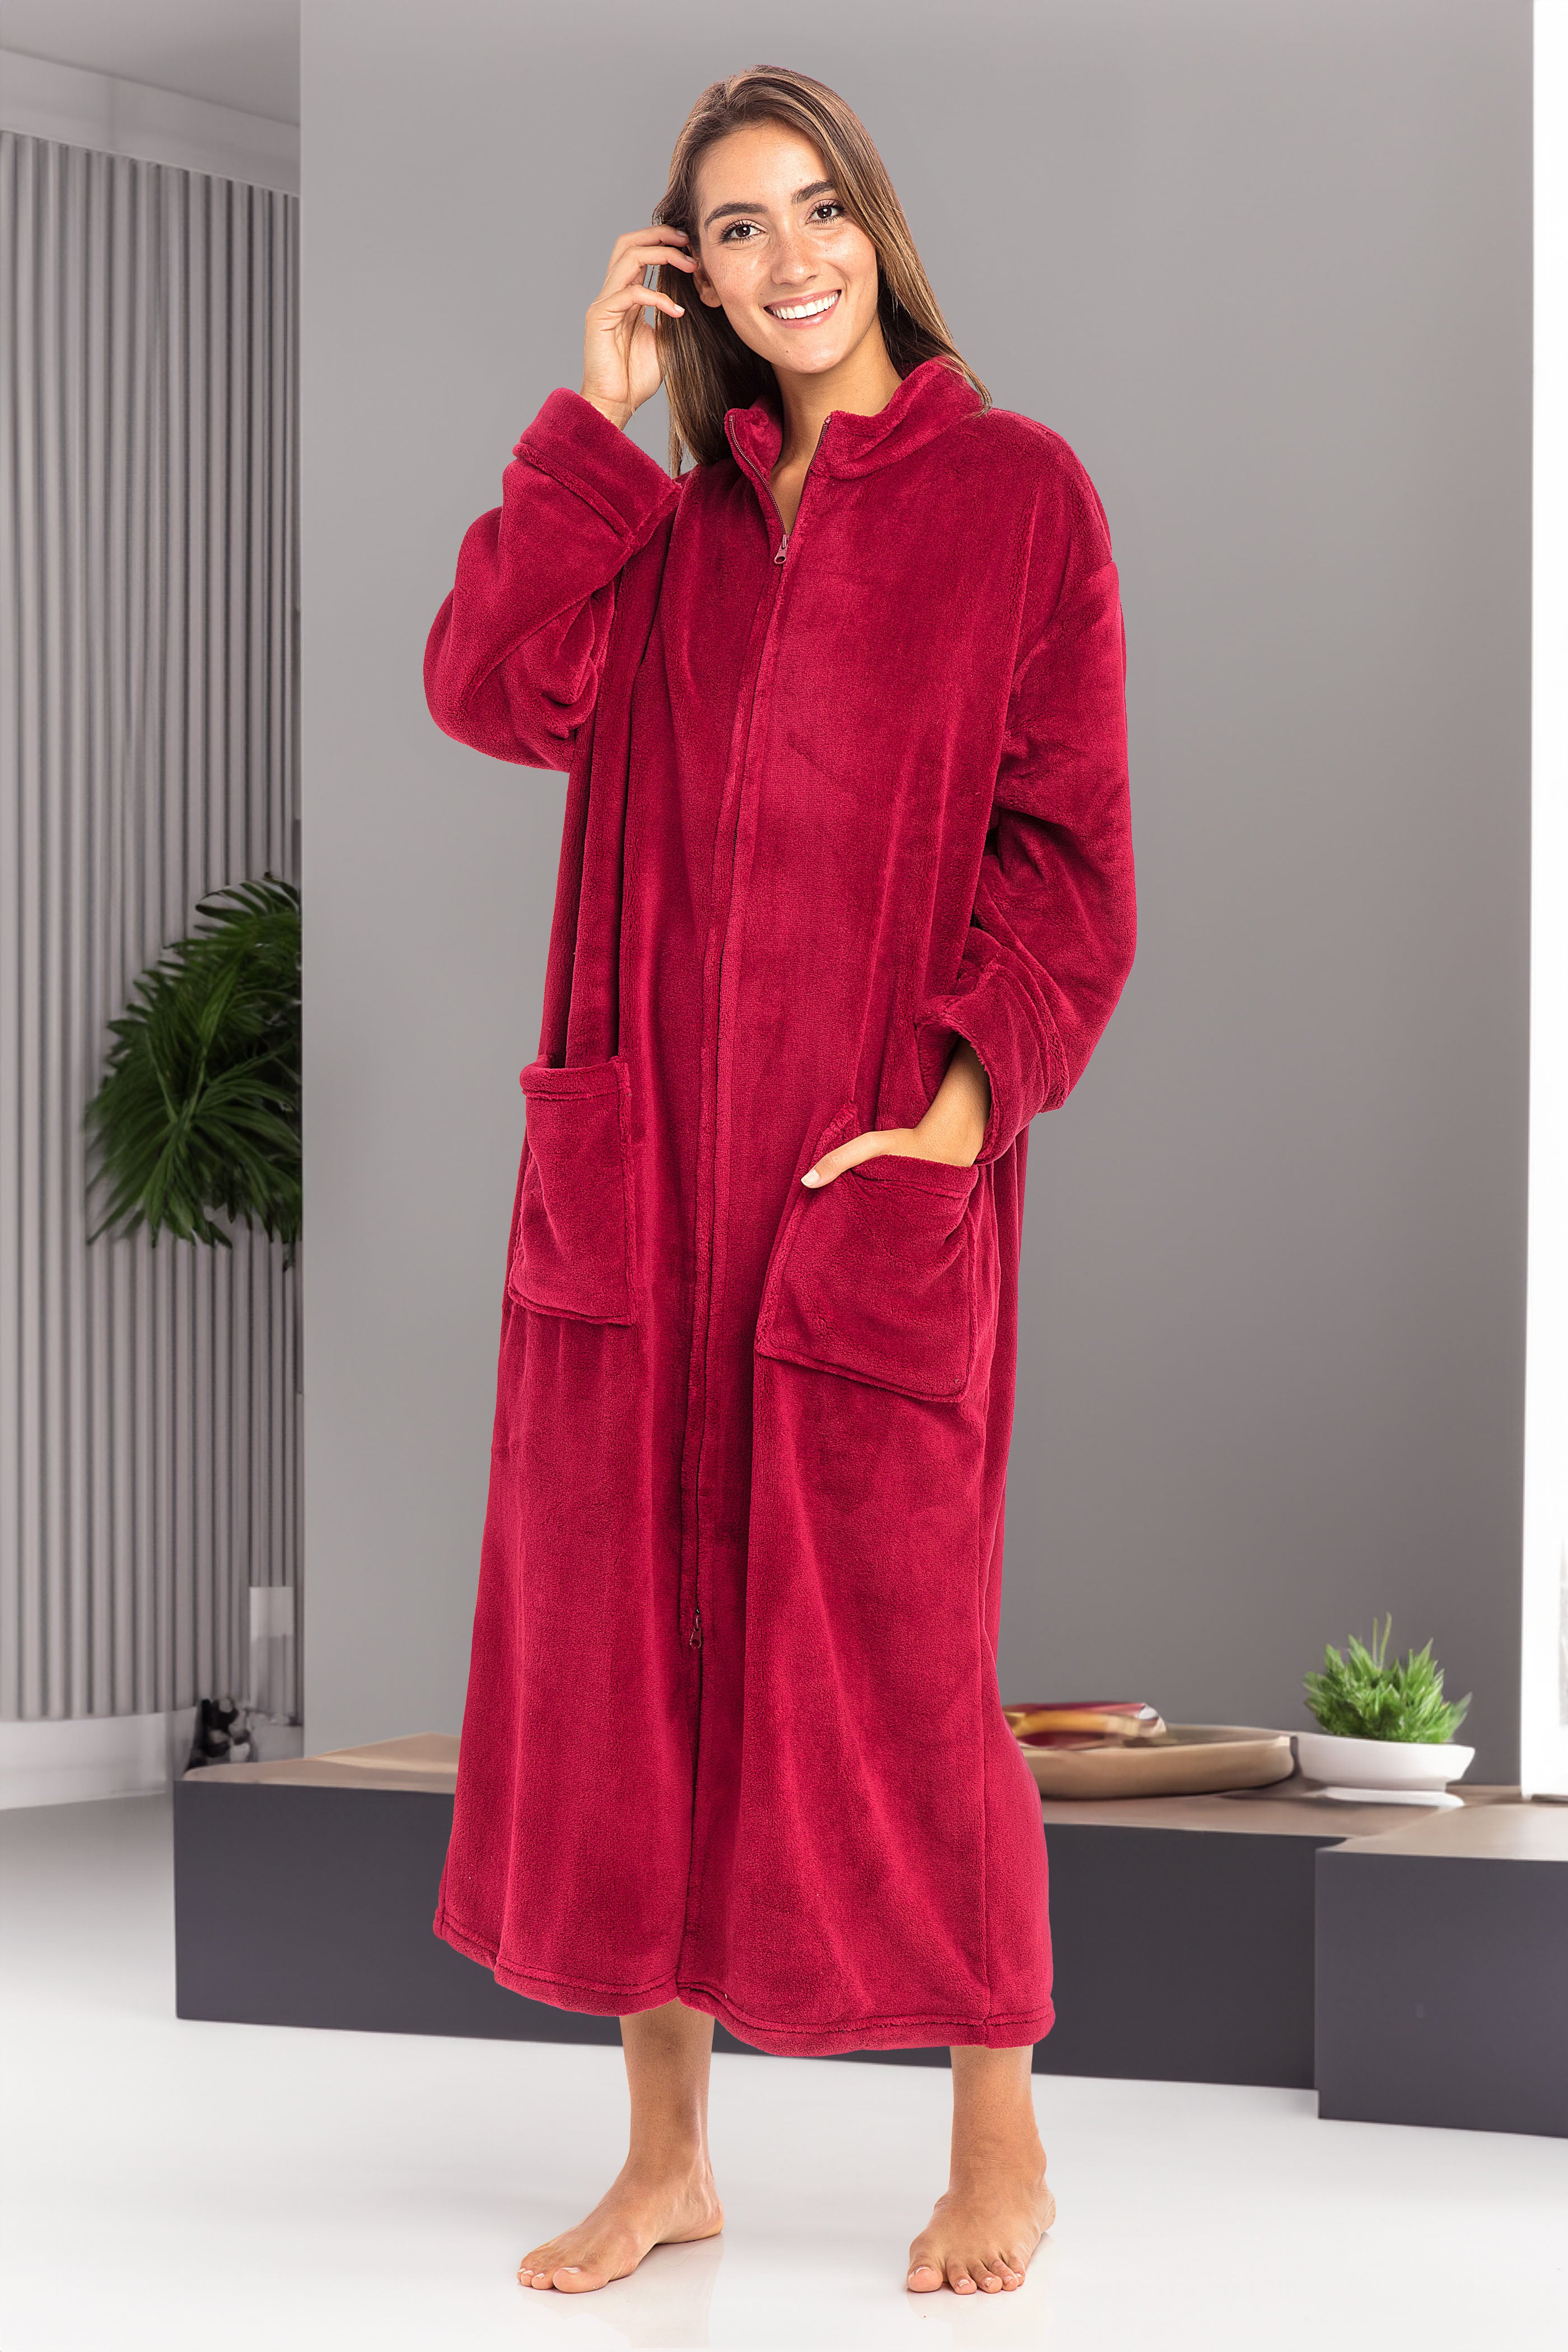 Women's Zip Up Plush Robe, Oversized Bathrobe with Two Way Zipper